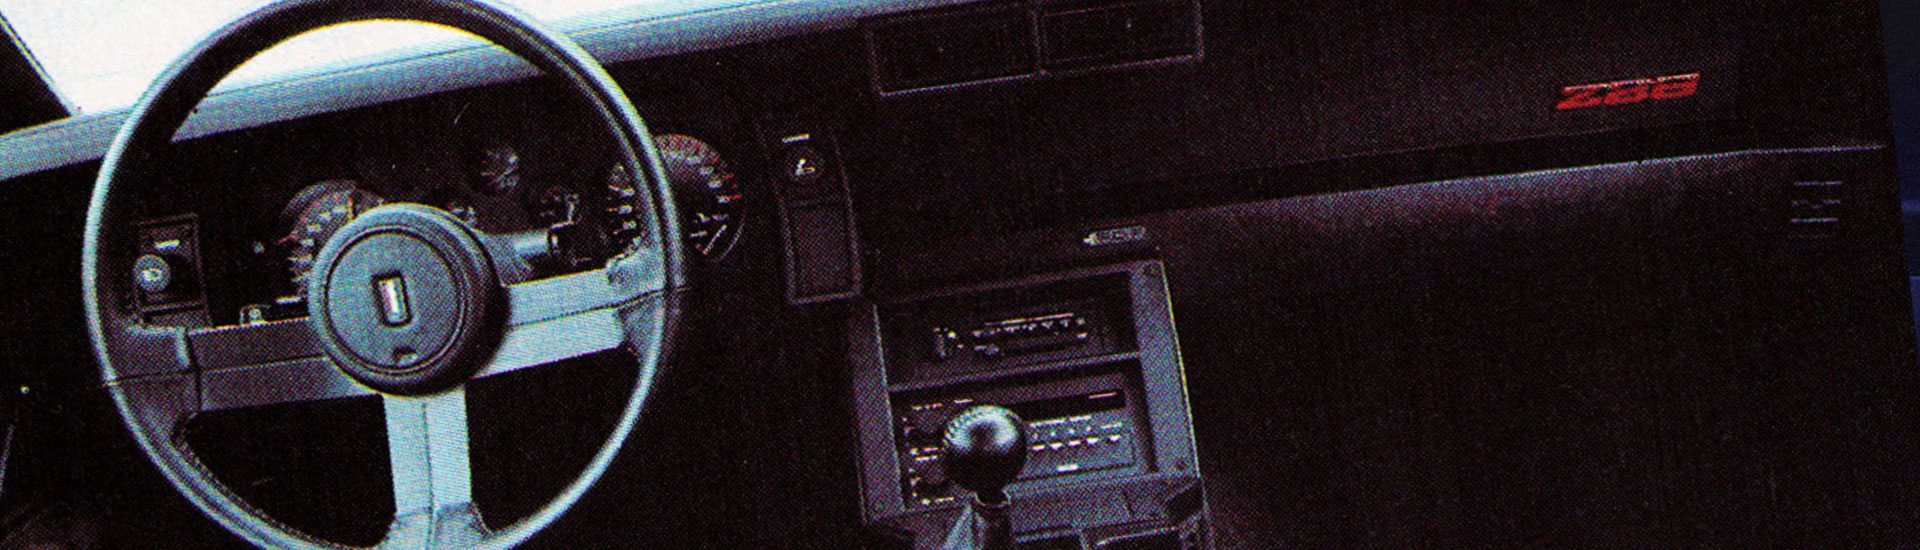 1983 Chevrolet Camaro Dash Kits